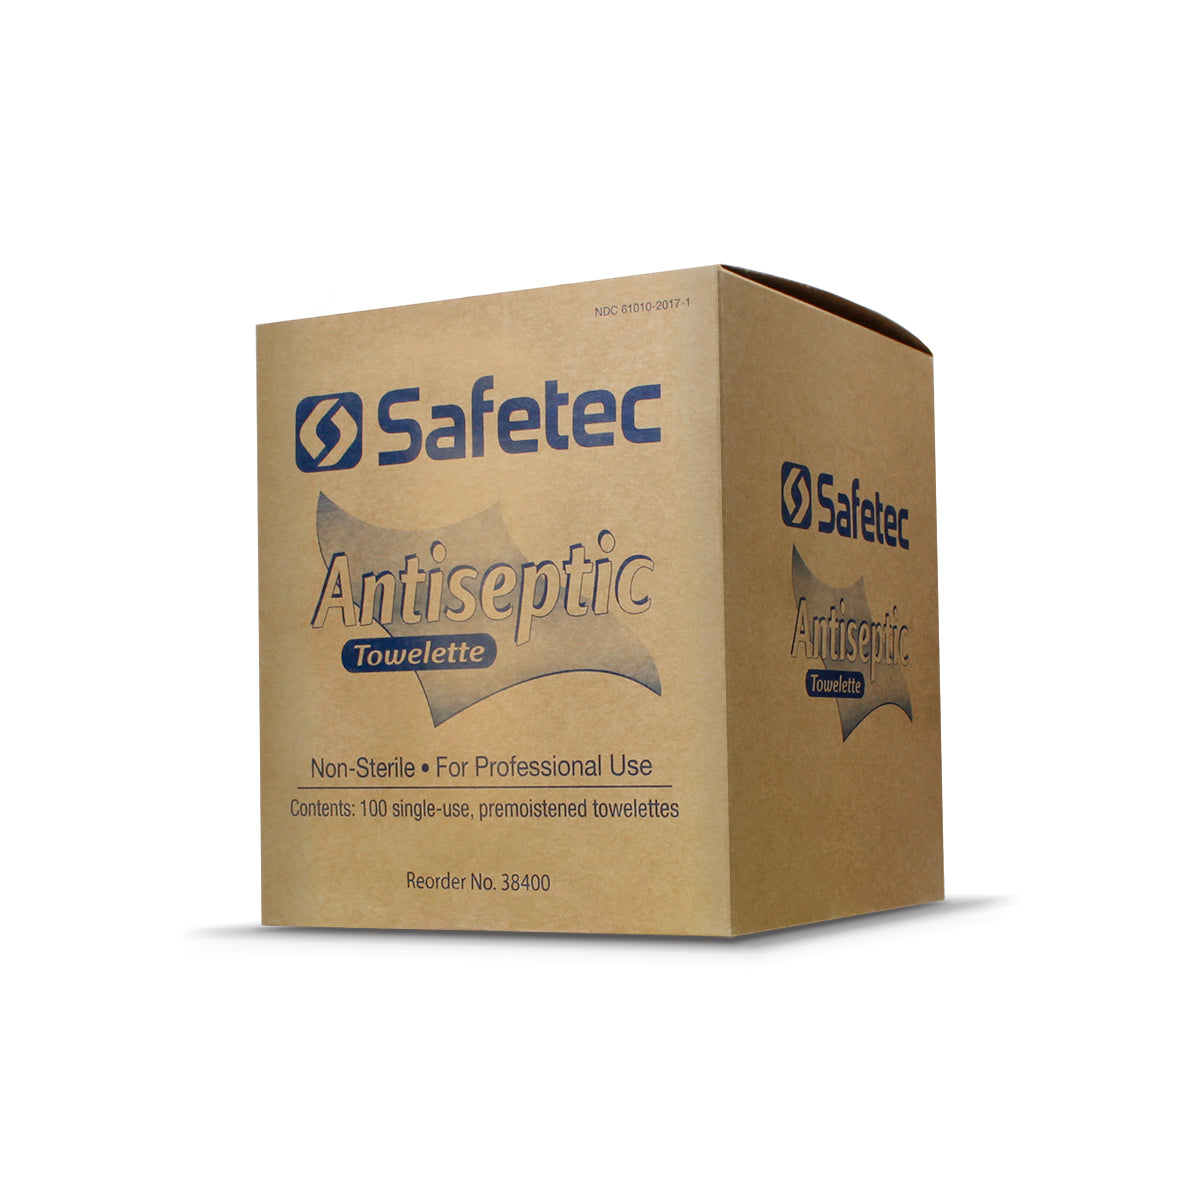 SafeTec - Antiseptic Wipes data-zoom=